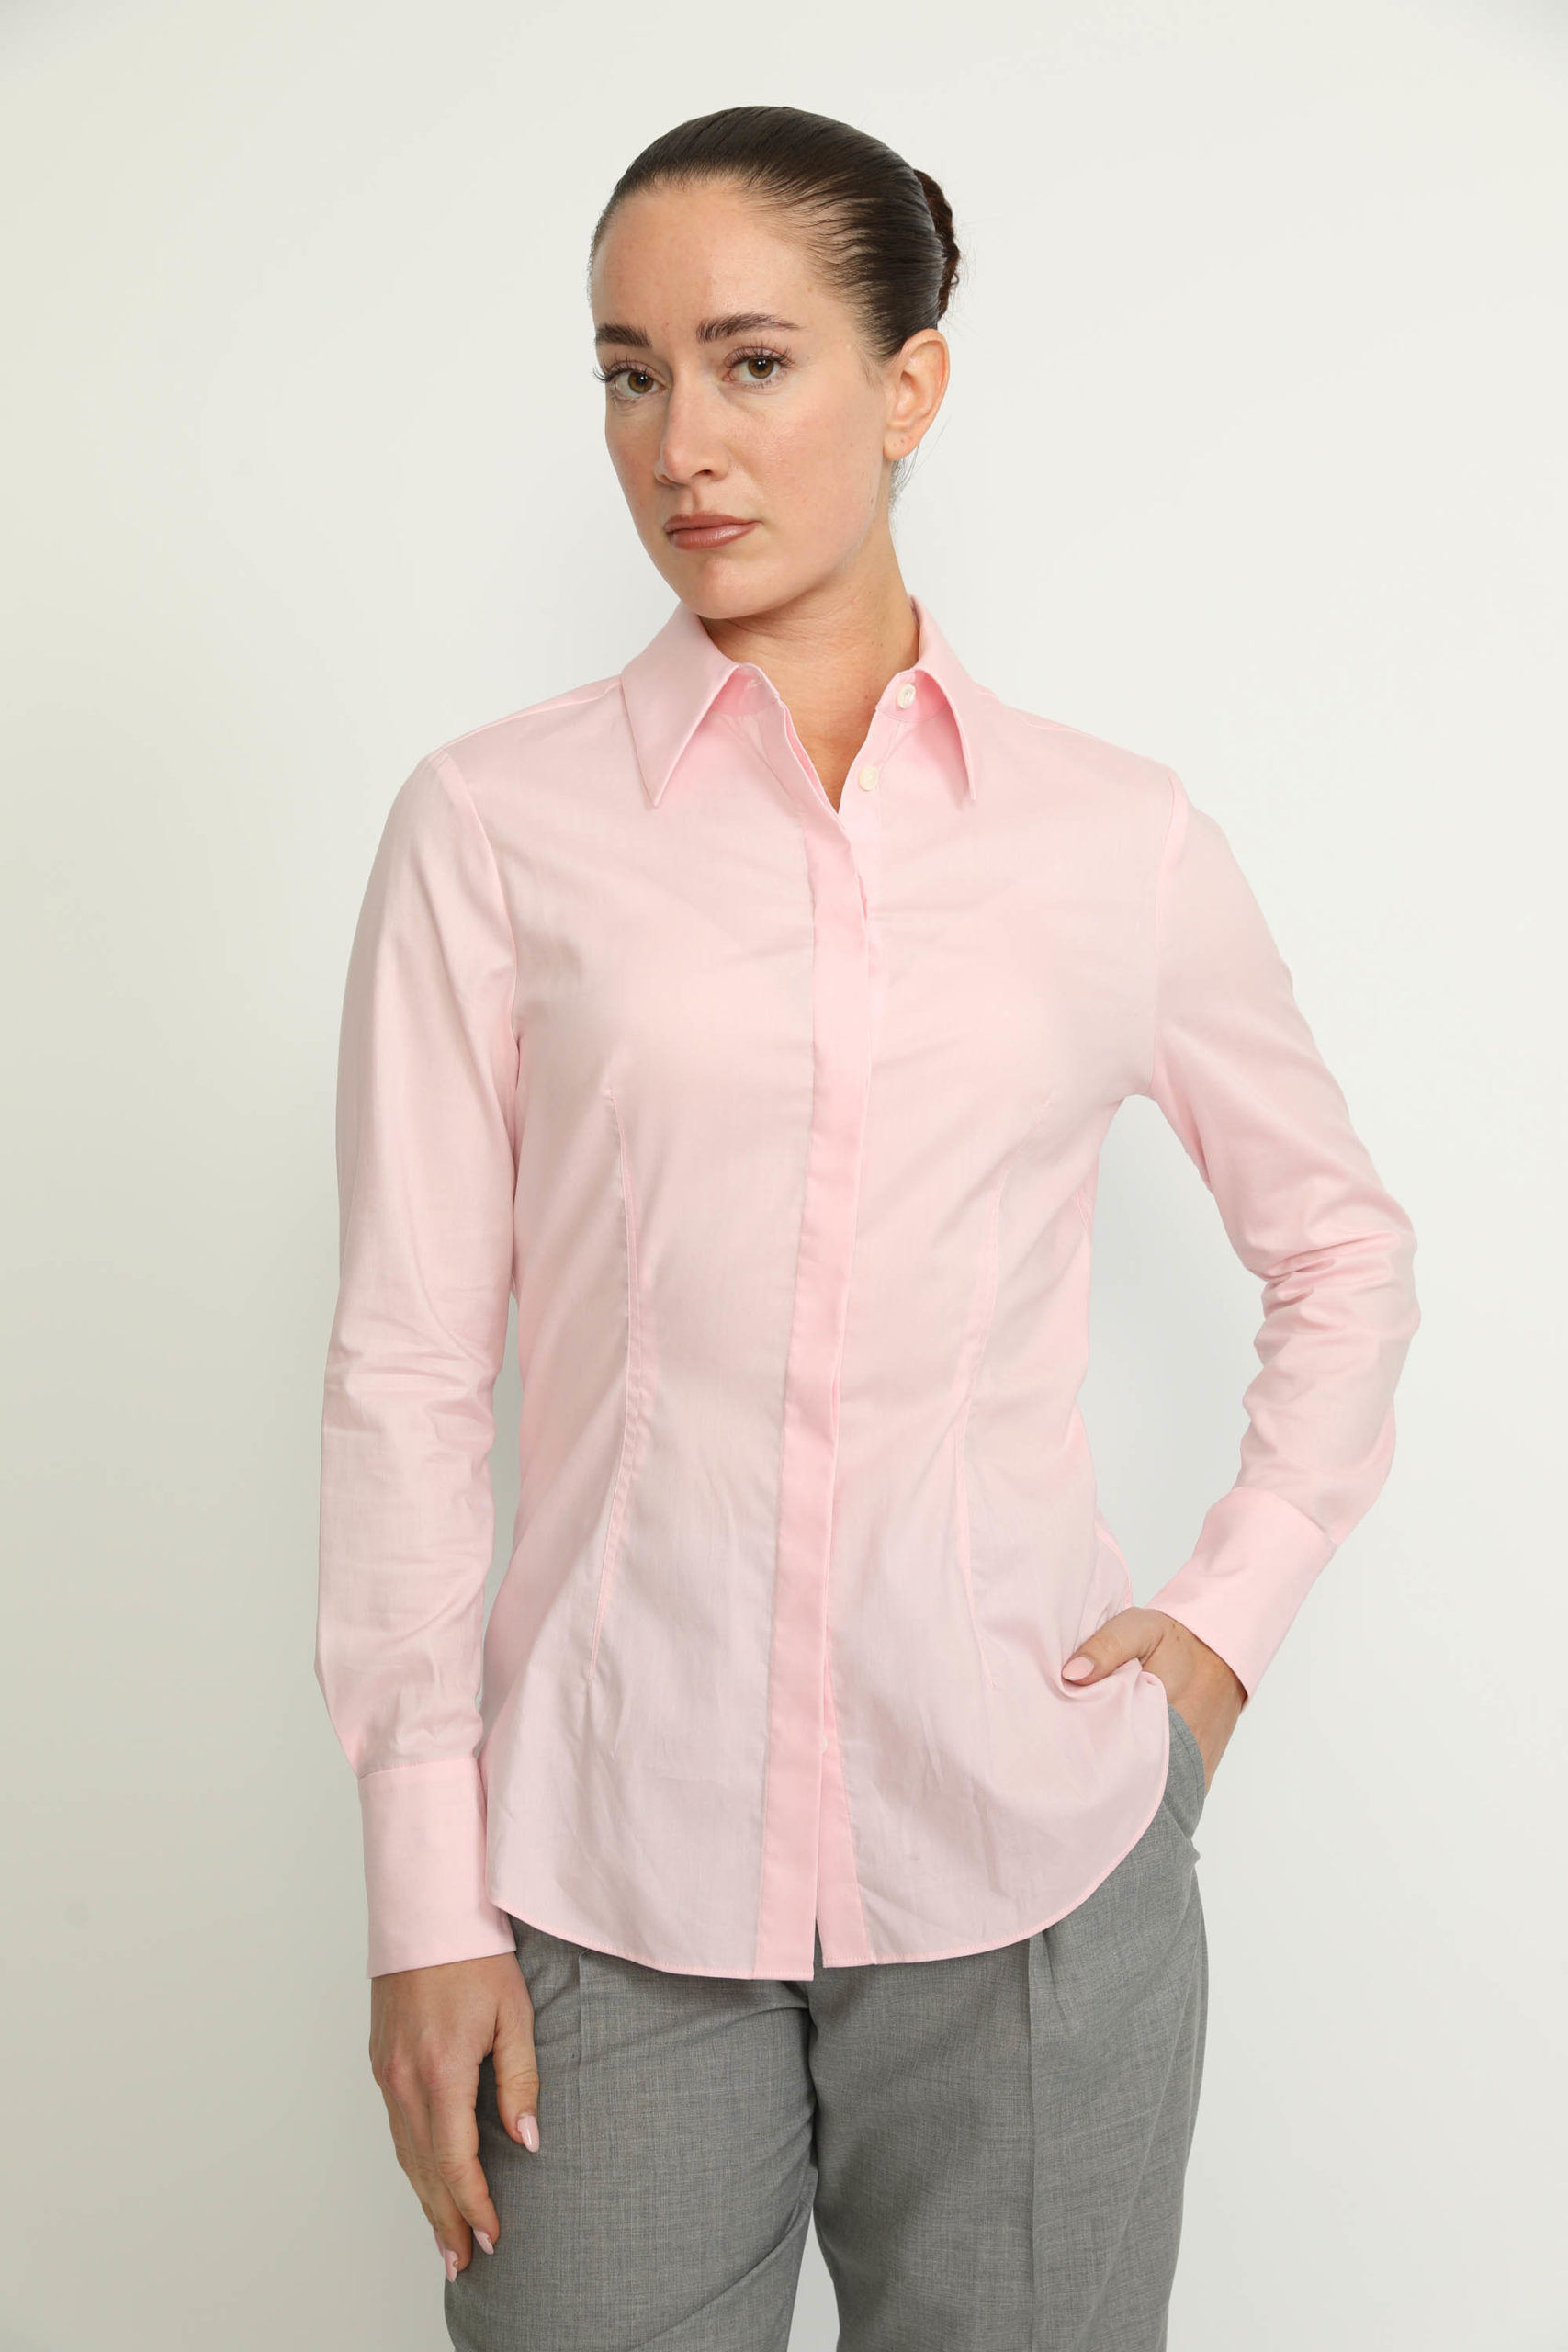 Mirandela Shirt – Mirandela Classic Fitted Pink Shirt